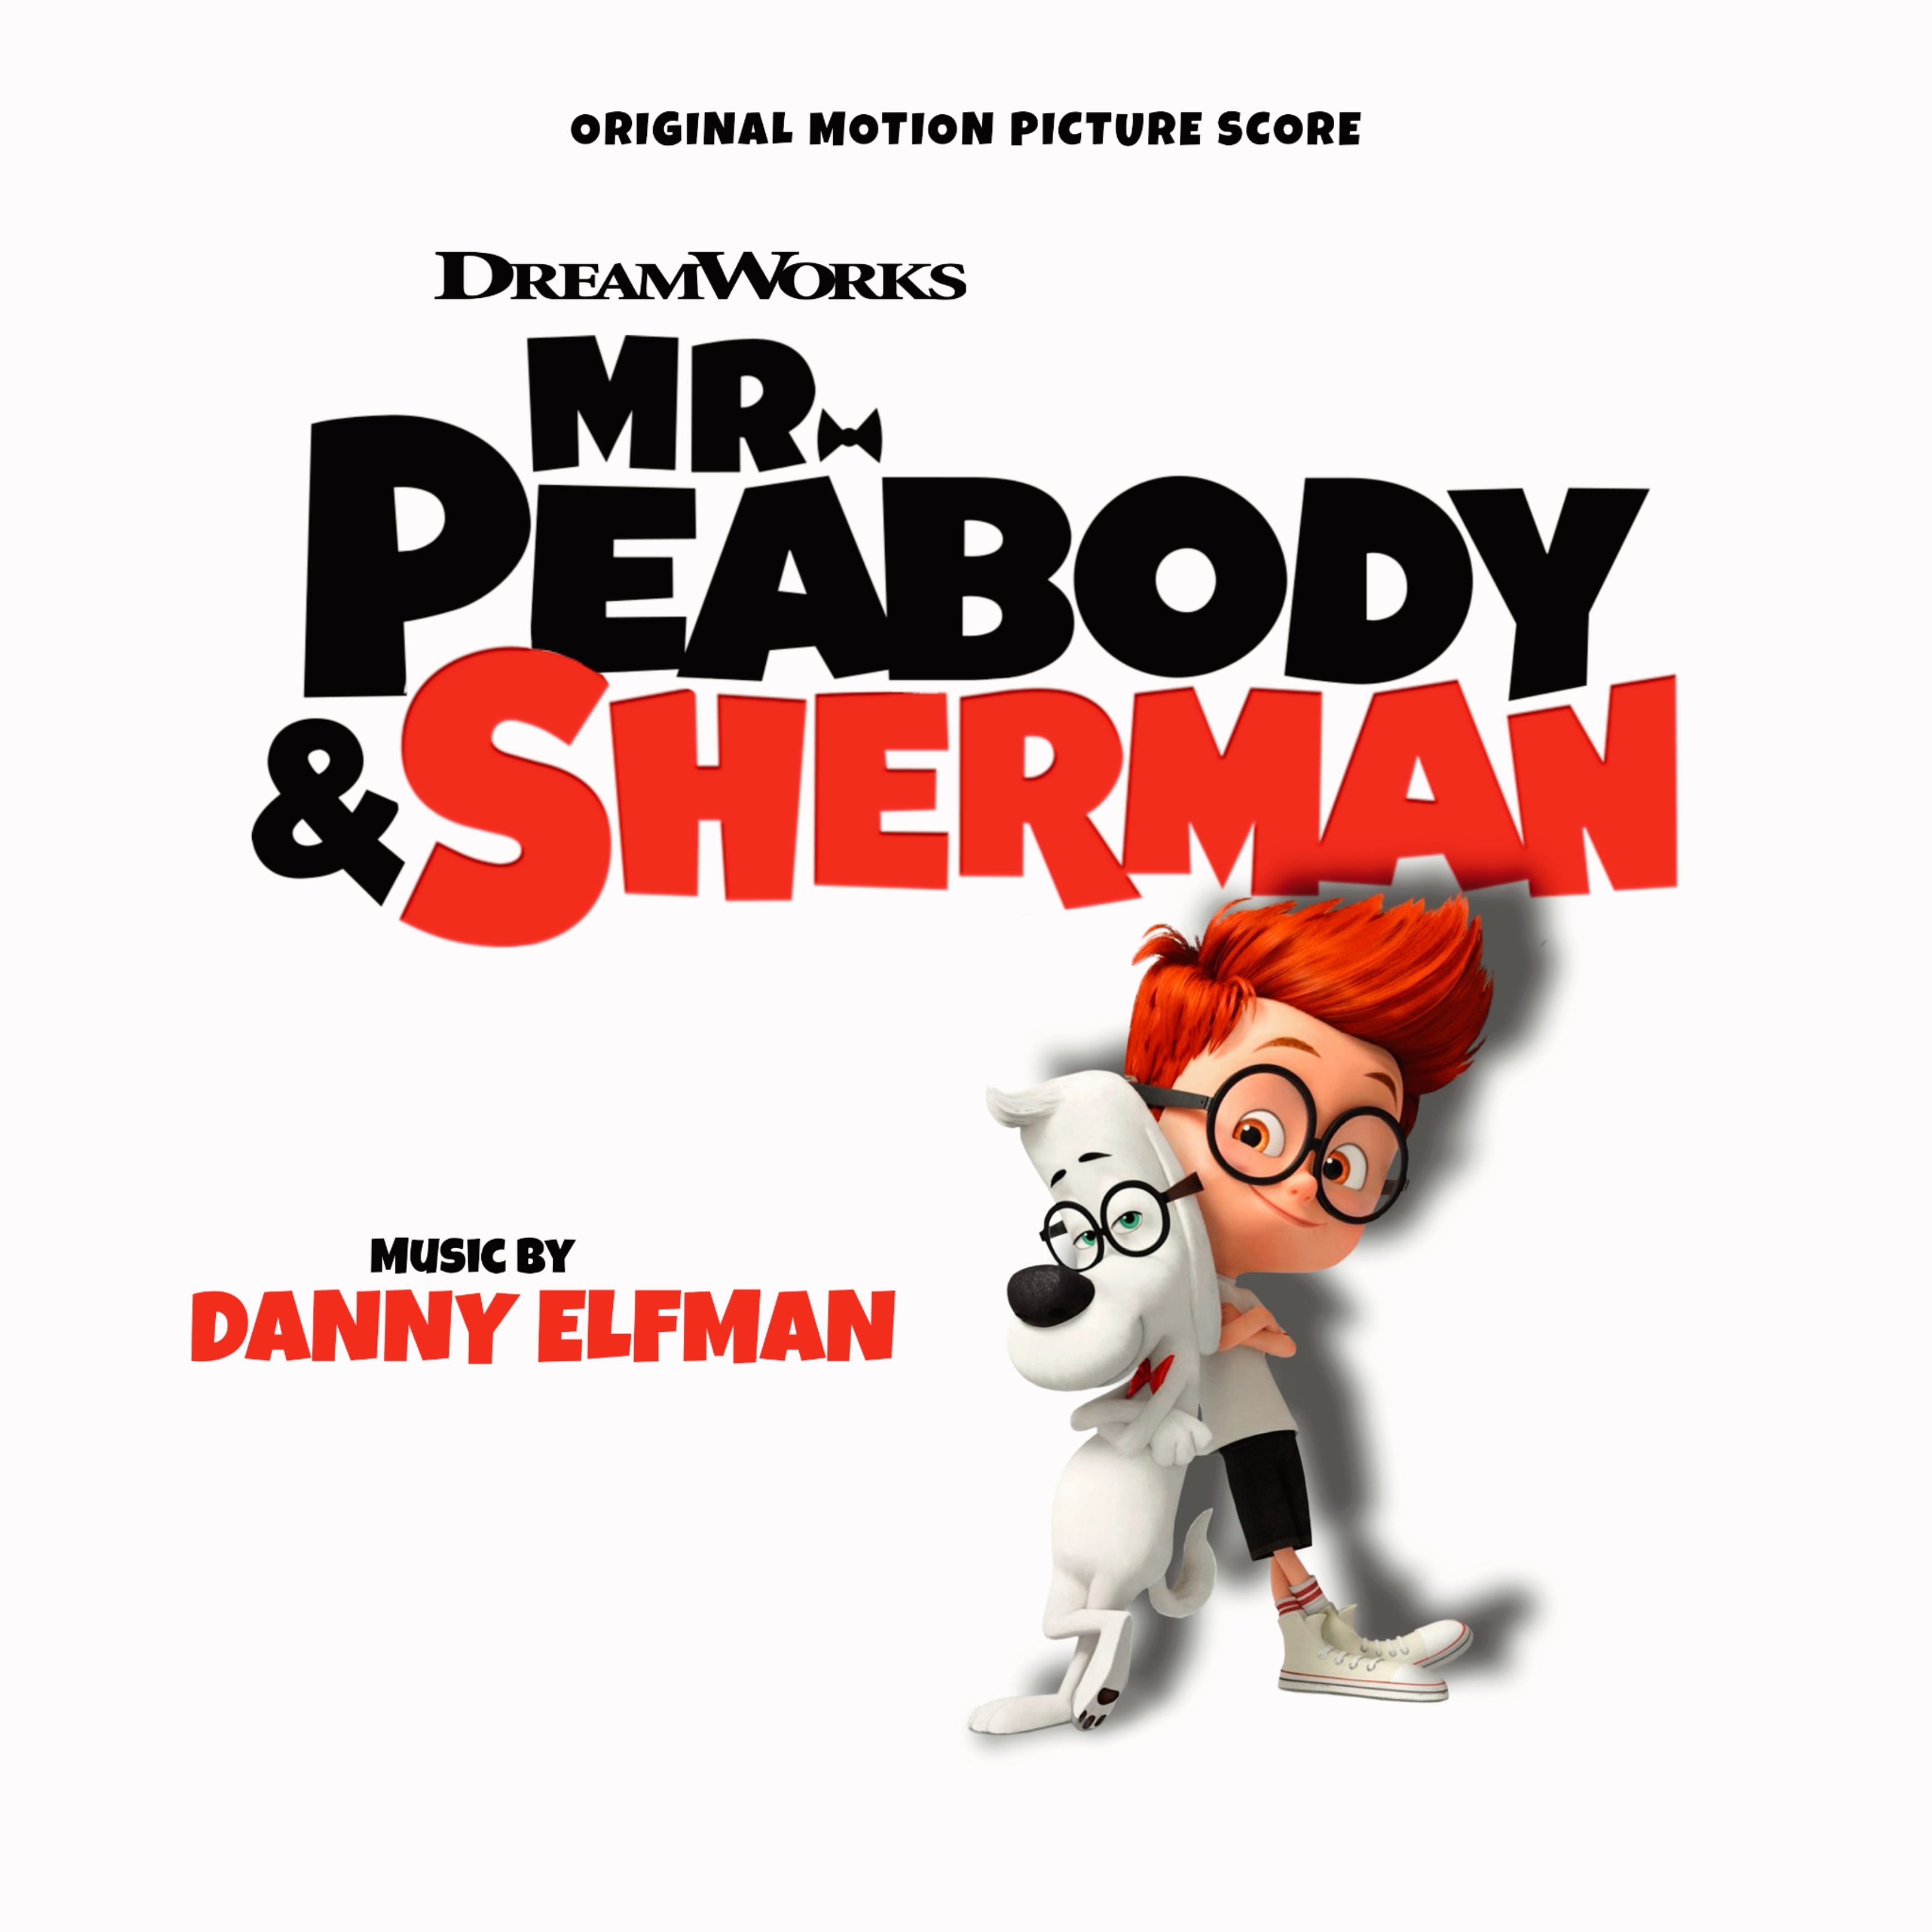 Happy 10th Anniversary, Mr. Peabody and Sherman! by Csodaaut on DeviantArt